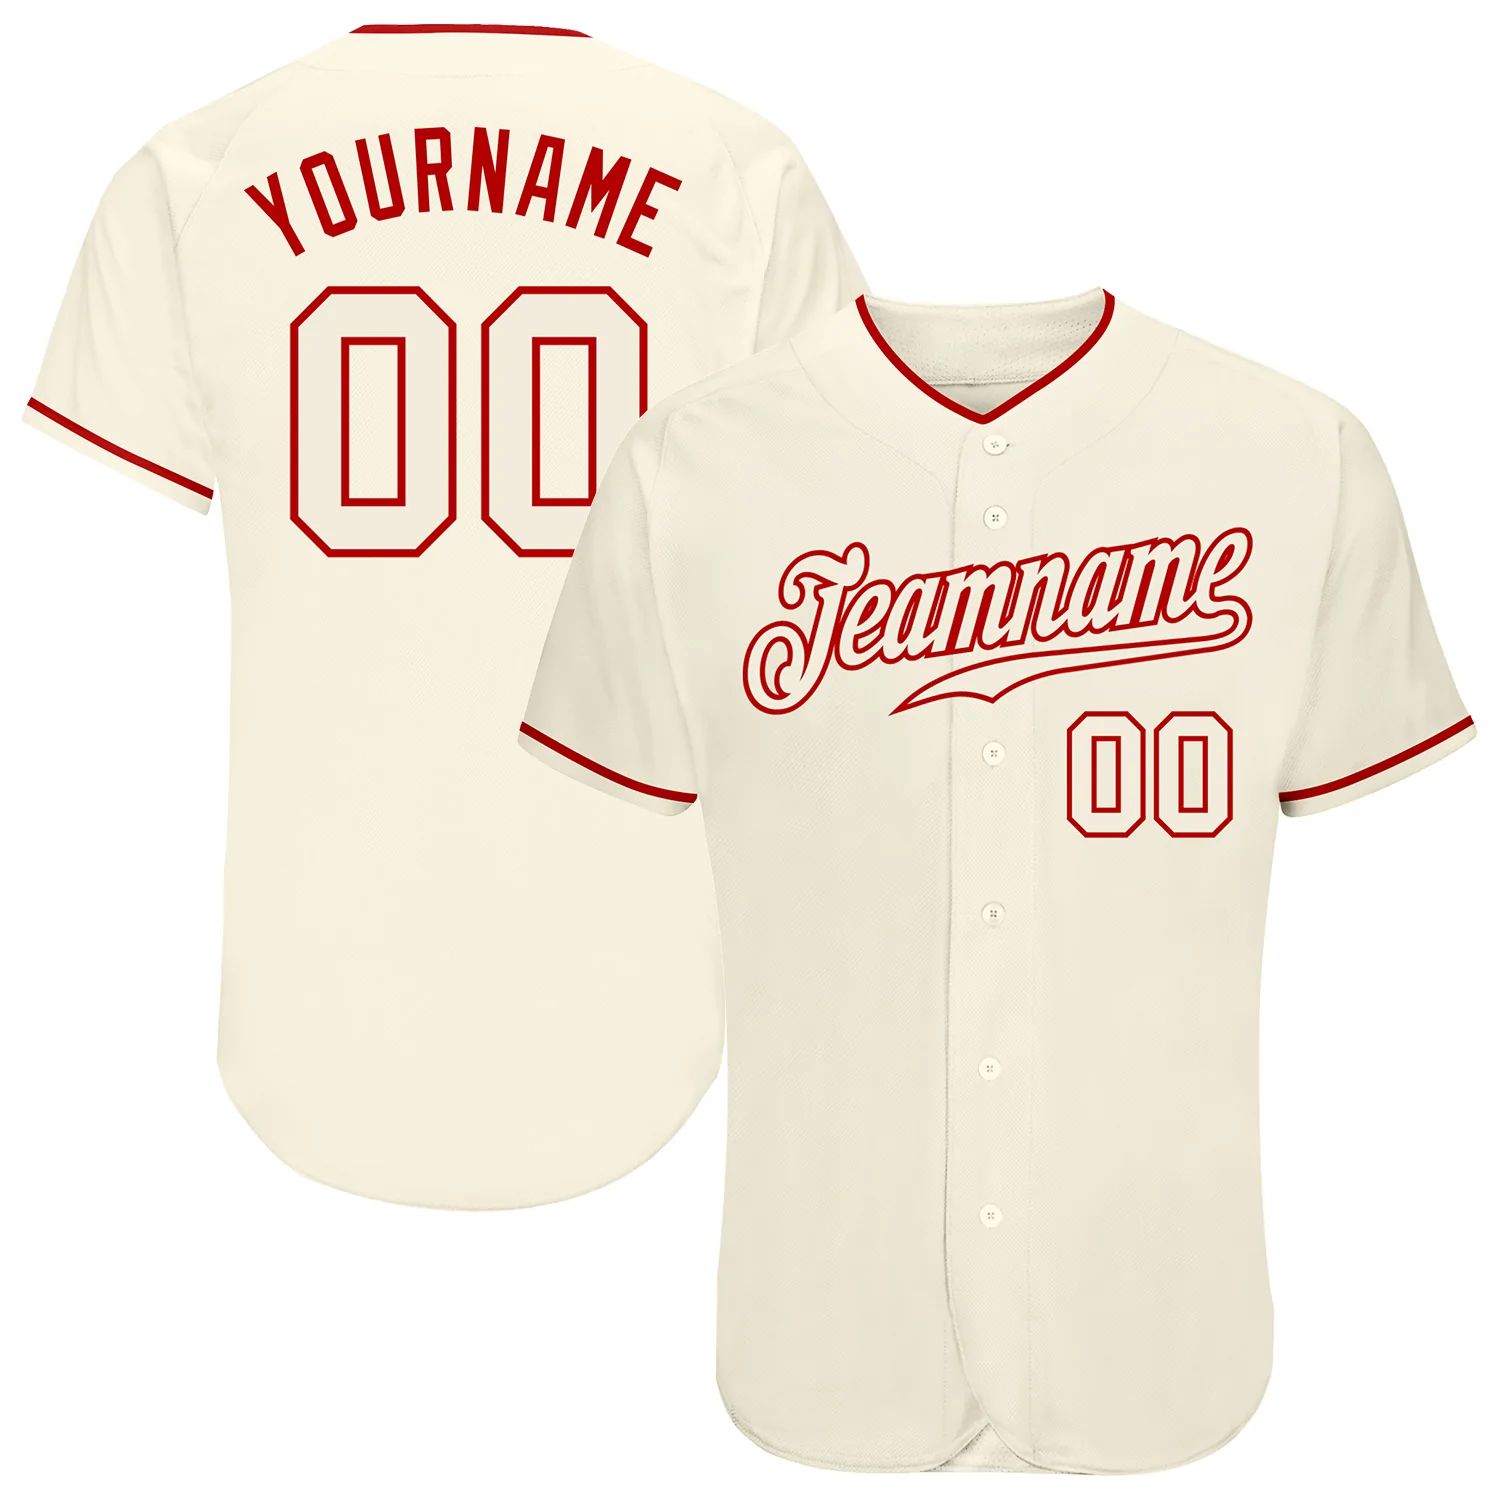 build-red-cream-baseball-cream-jersey-authentic-cream0092-online-1.jpg